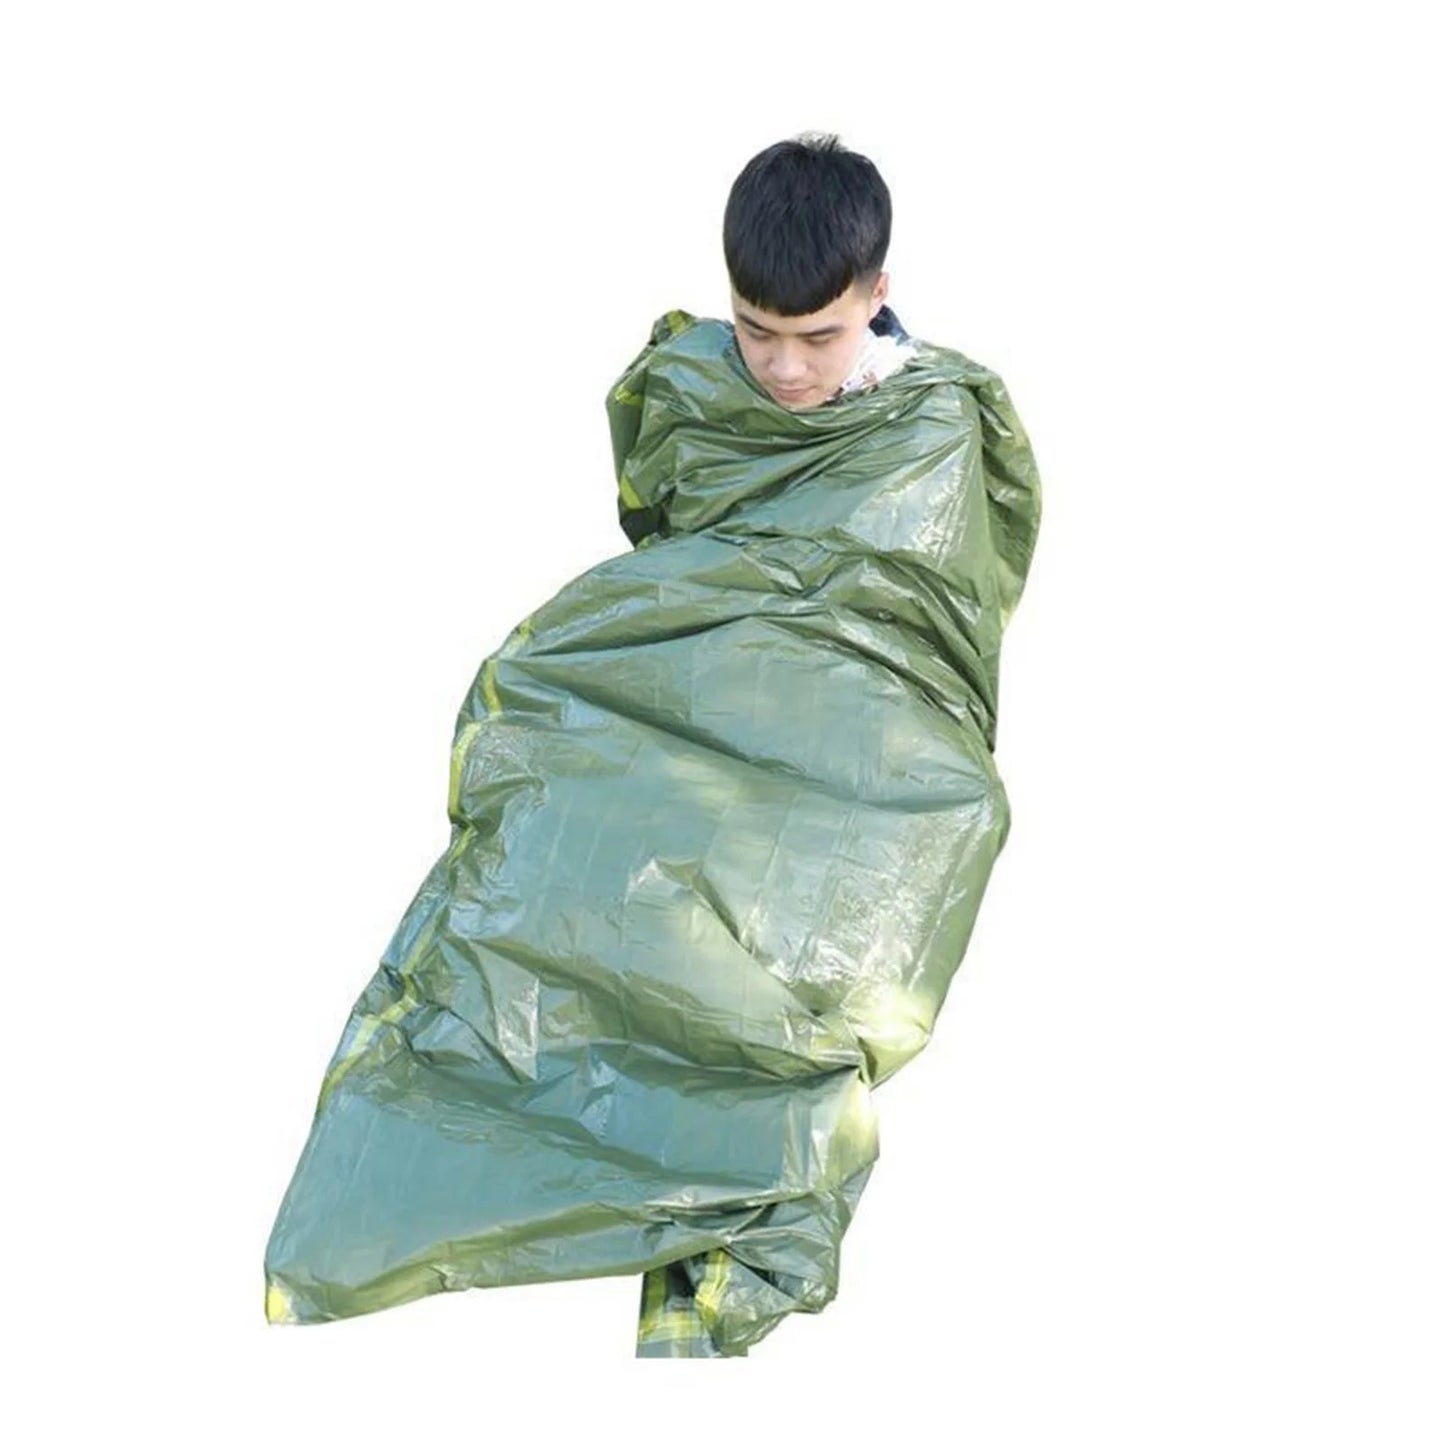 Outdoor PE Orange Emergency Sleeping Bag Disaster Relief Cold Protection Heat Insulation Emergency Sleeping Bag